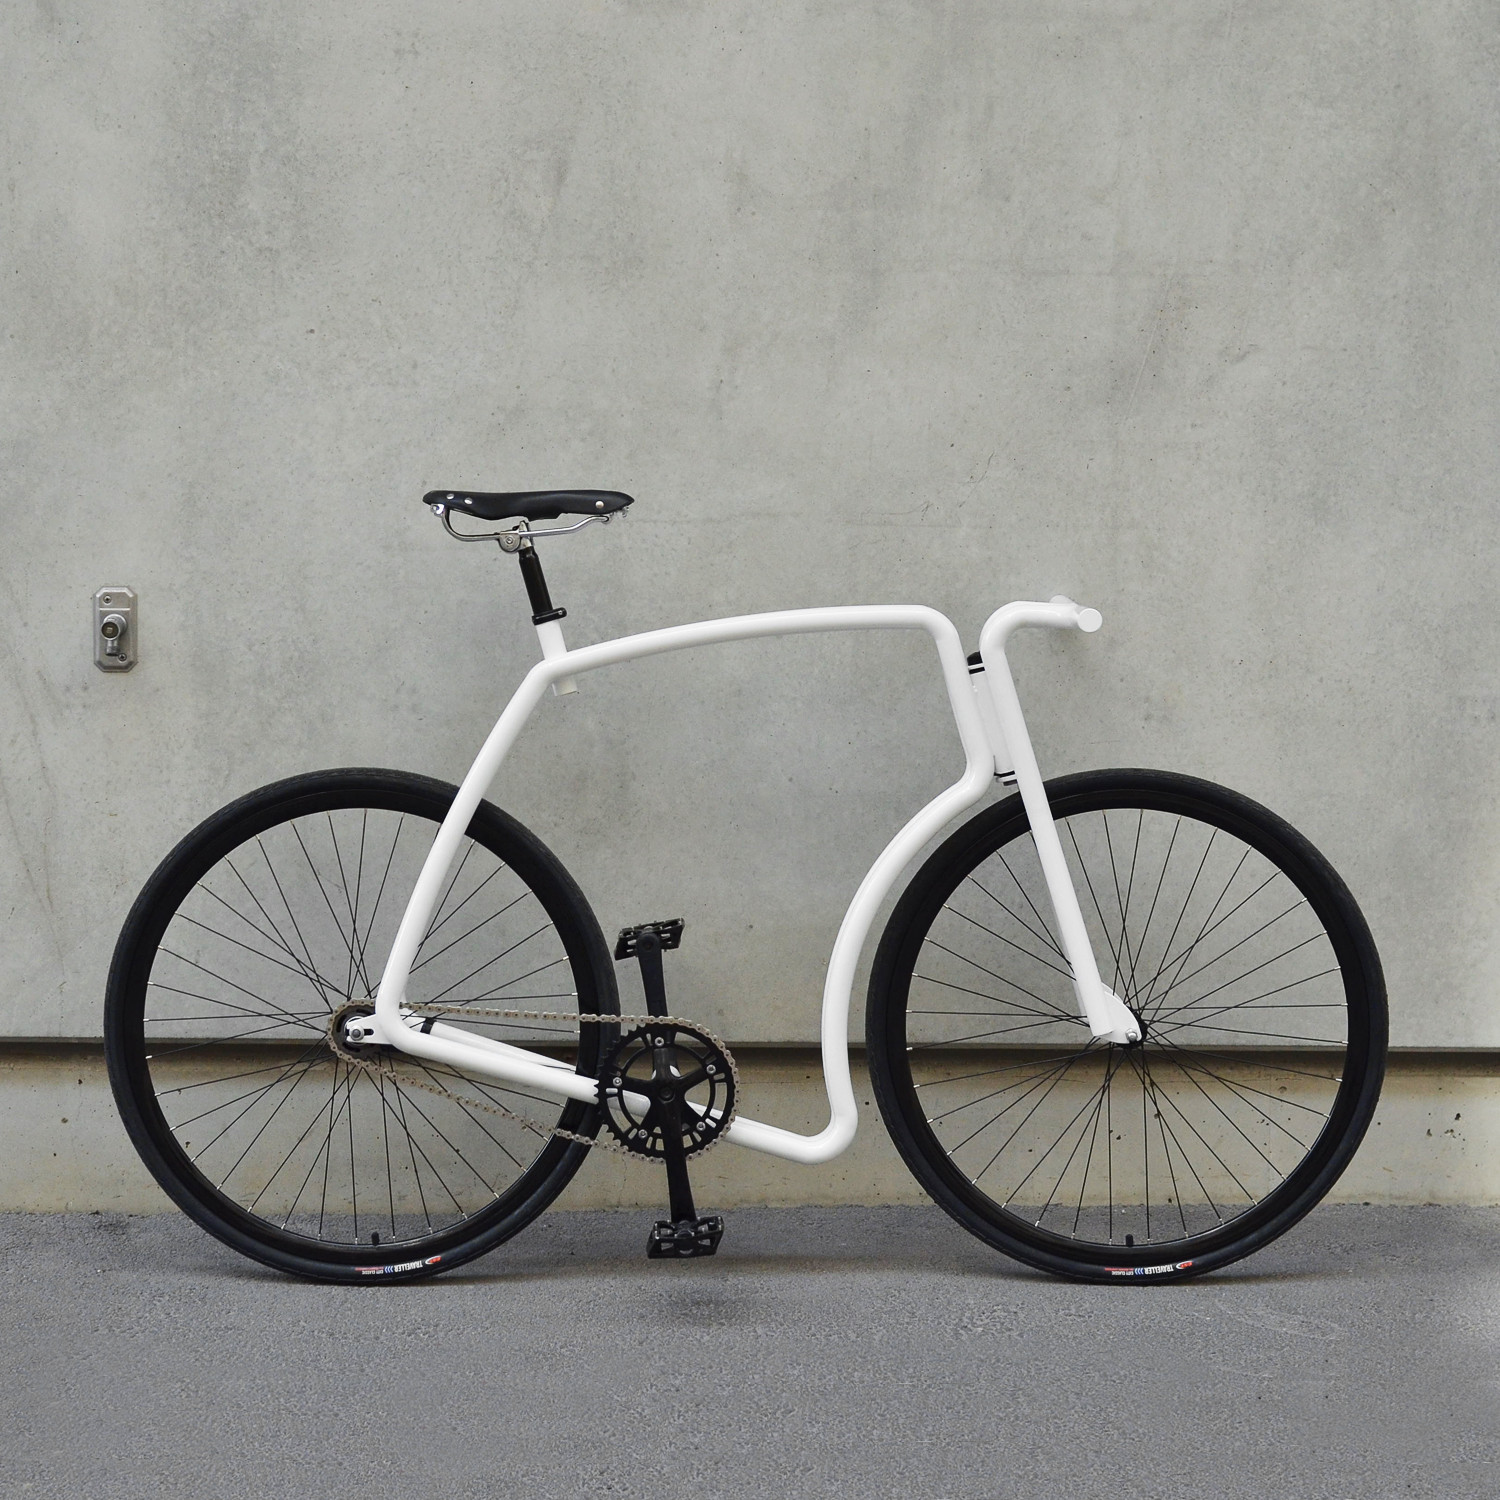 white bicycle rims